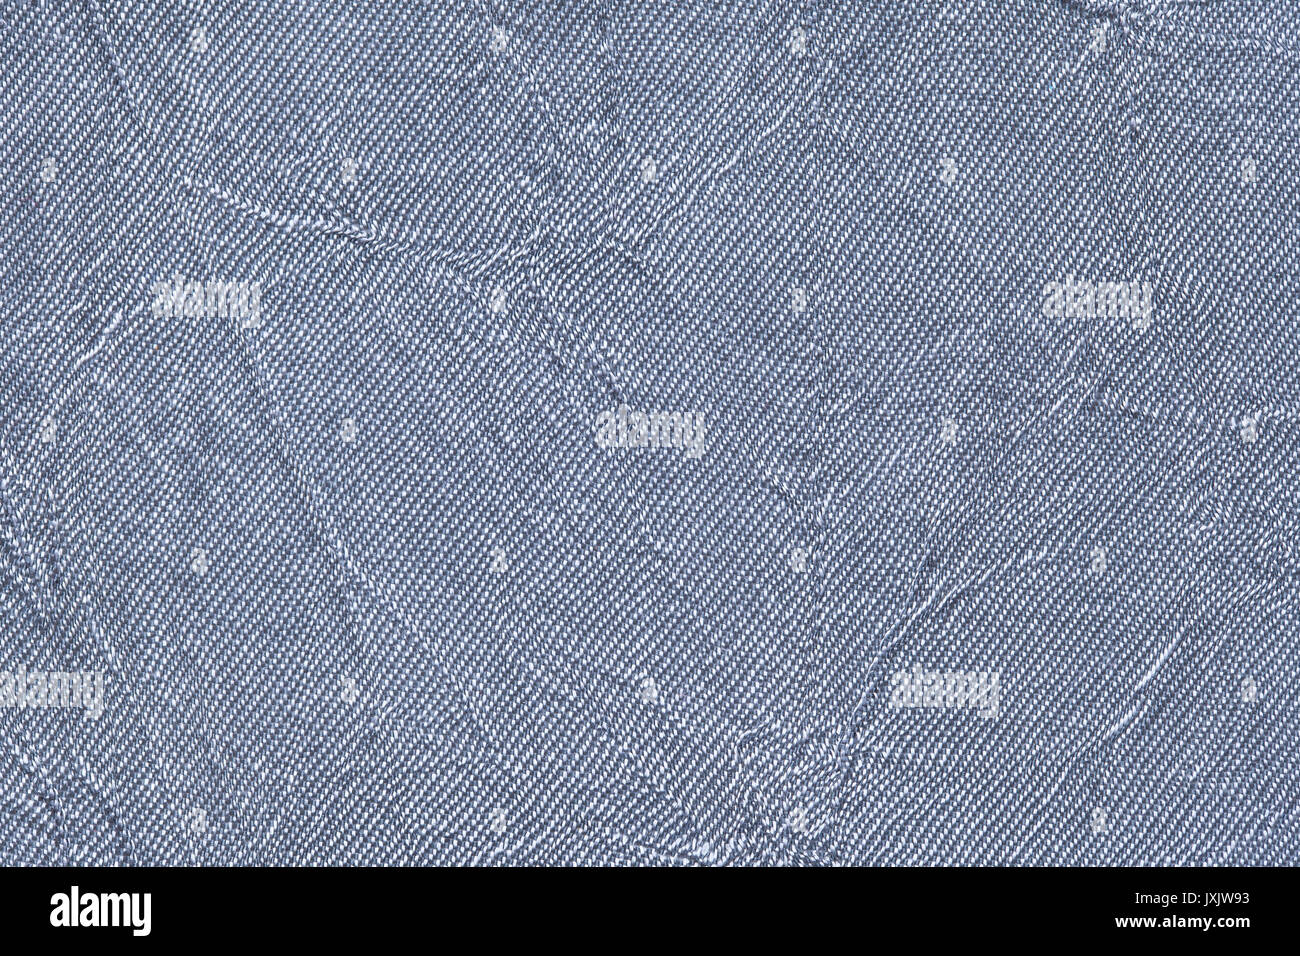 Amazoncom DIY Shiny Denim Fabric Fashion ThreeDimensional Fabric with  Star Moon Pattern Tiedye Fabric Soft Polyester Cotton Washed Material for  Jeans Dressmaking TShirt Clothes SewiSize145x15m57x59in  藝術手工藝與縫紉